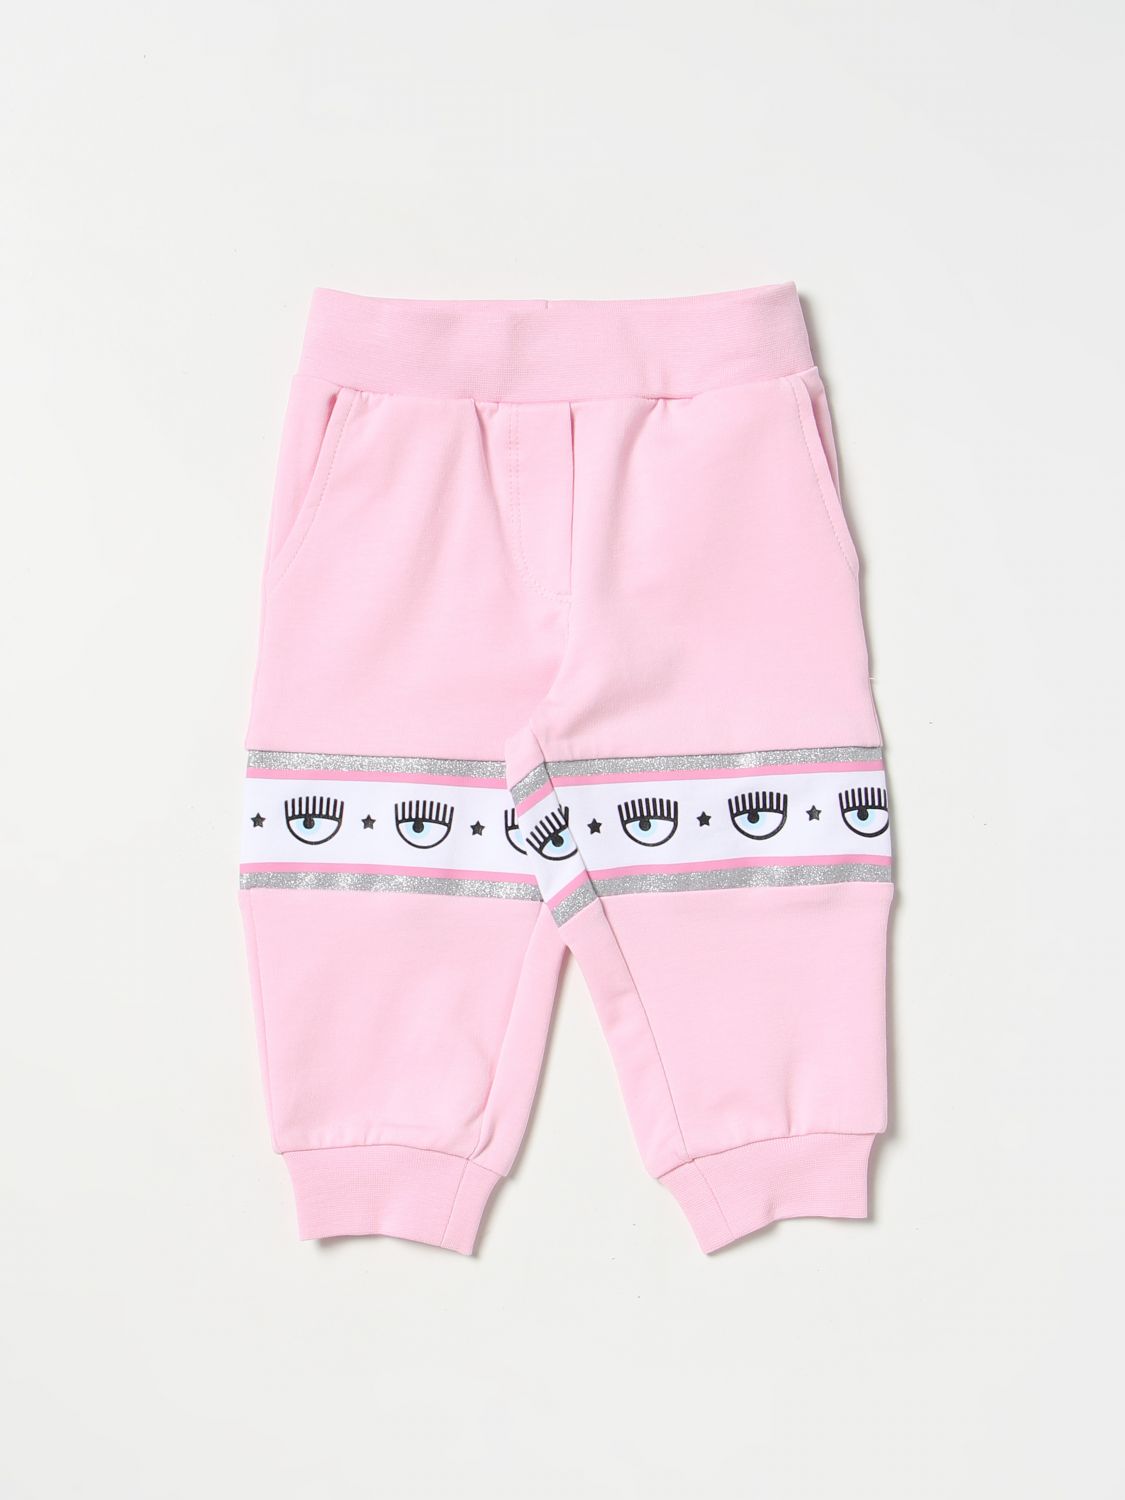 Chiara Ferragni Babies' Pants  Kids Color Pink In Lilac Sachet